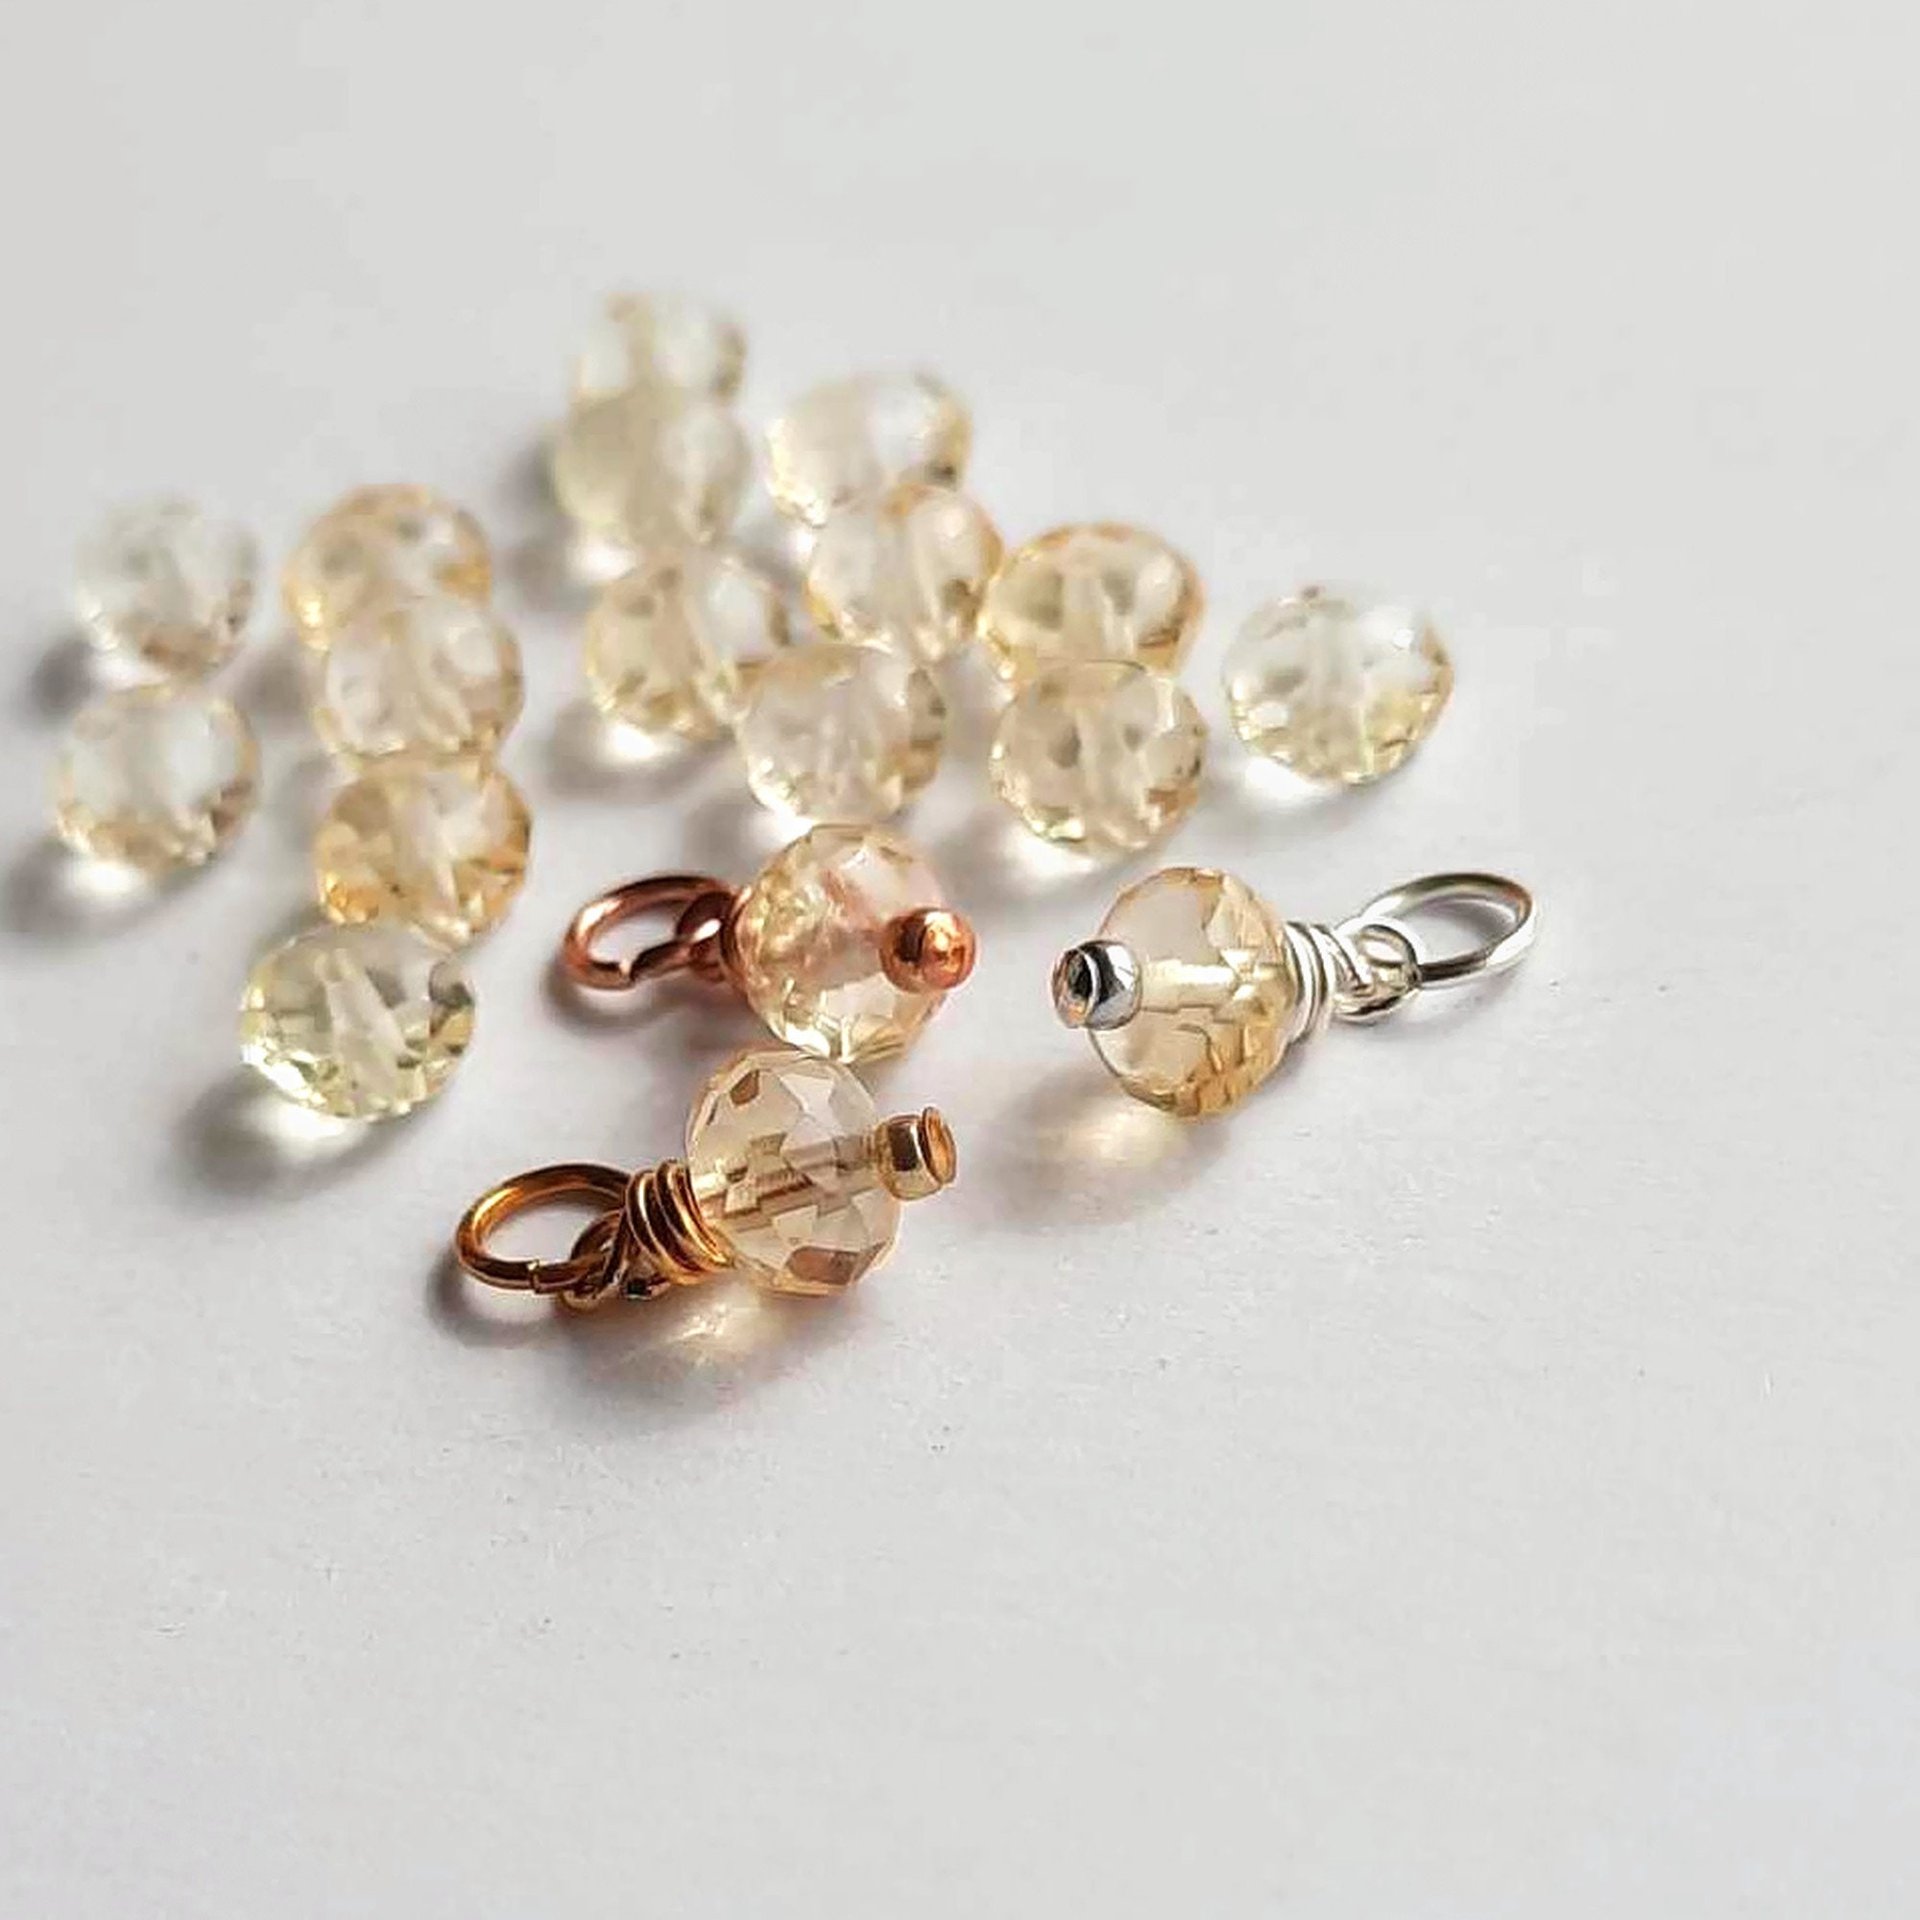 Pale Yellow Citrine Gemstone Charm ~ November Birthstone ~ Handmade by The Tiny Tree Frog Jewellery